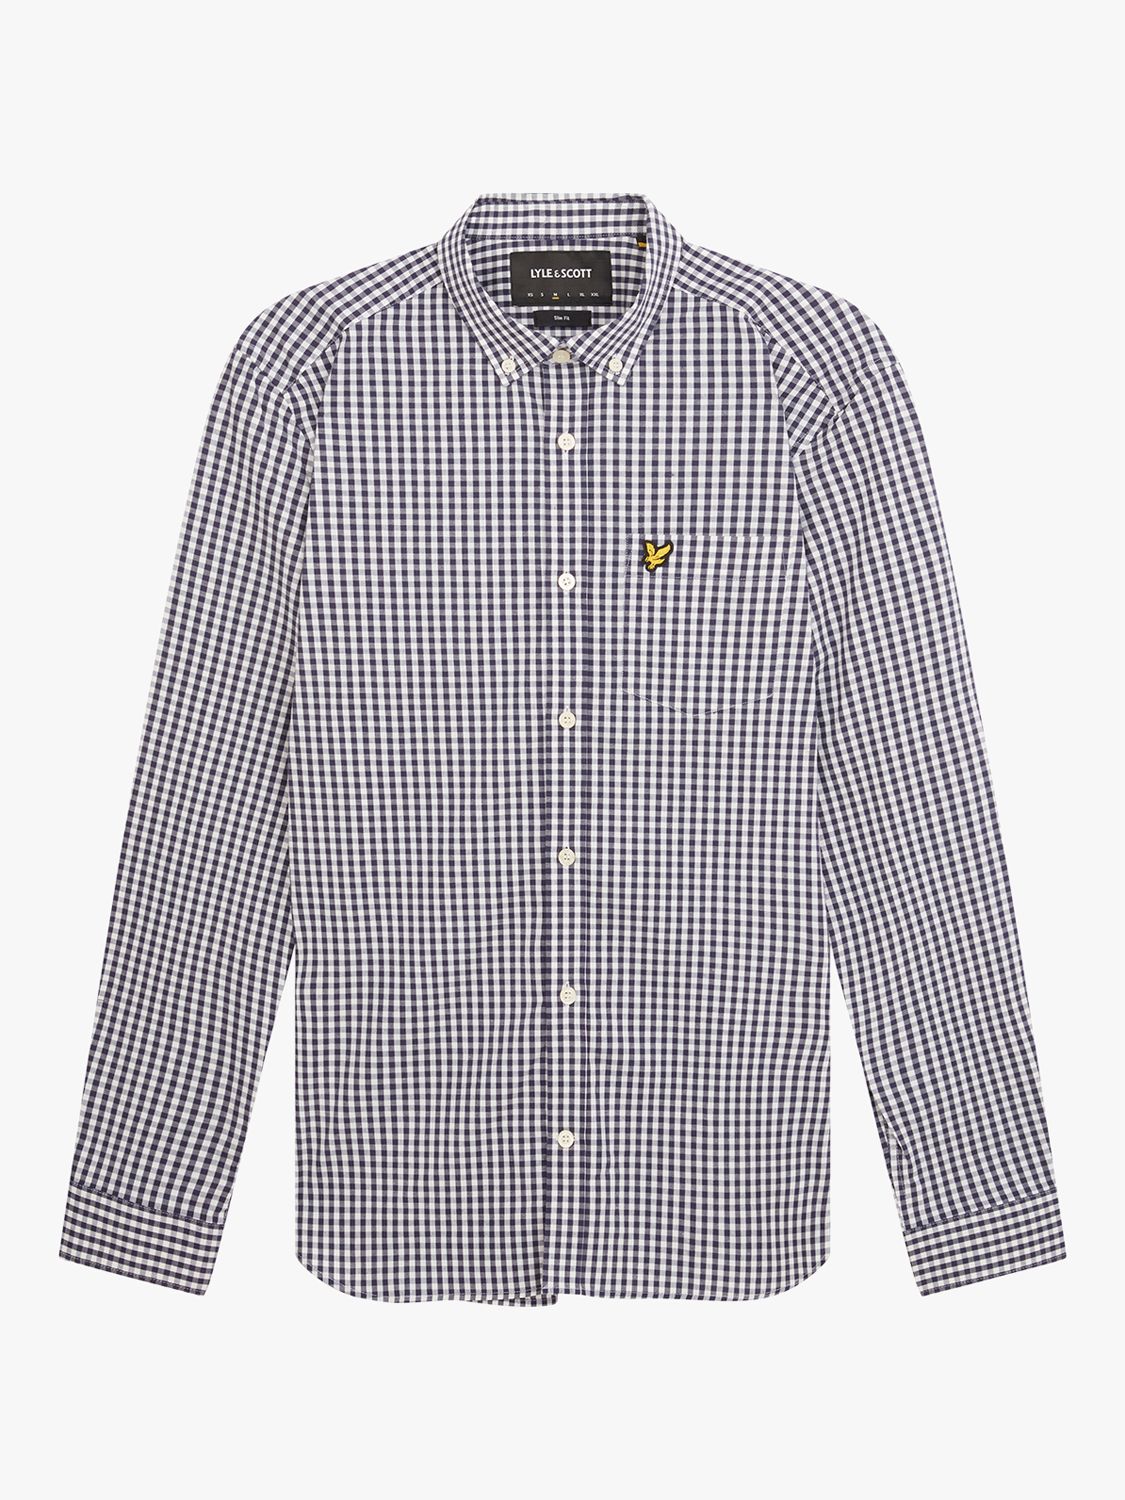 Buy Lyle & Scott Slim Fit Long Sleeve Gingham Shirt, Navy/White Online at johnlewis.com